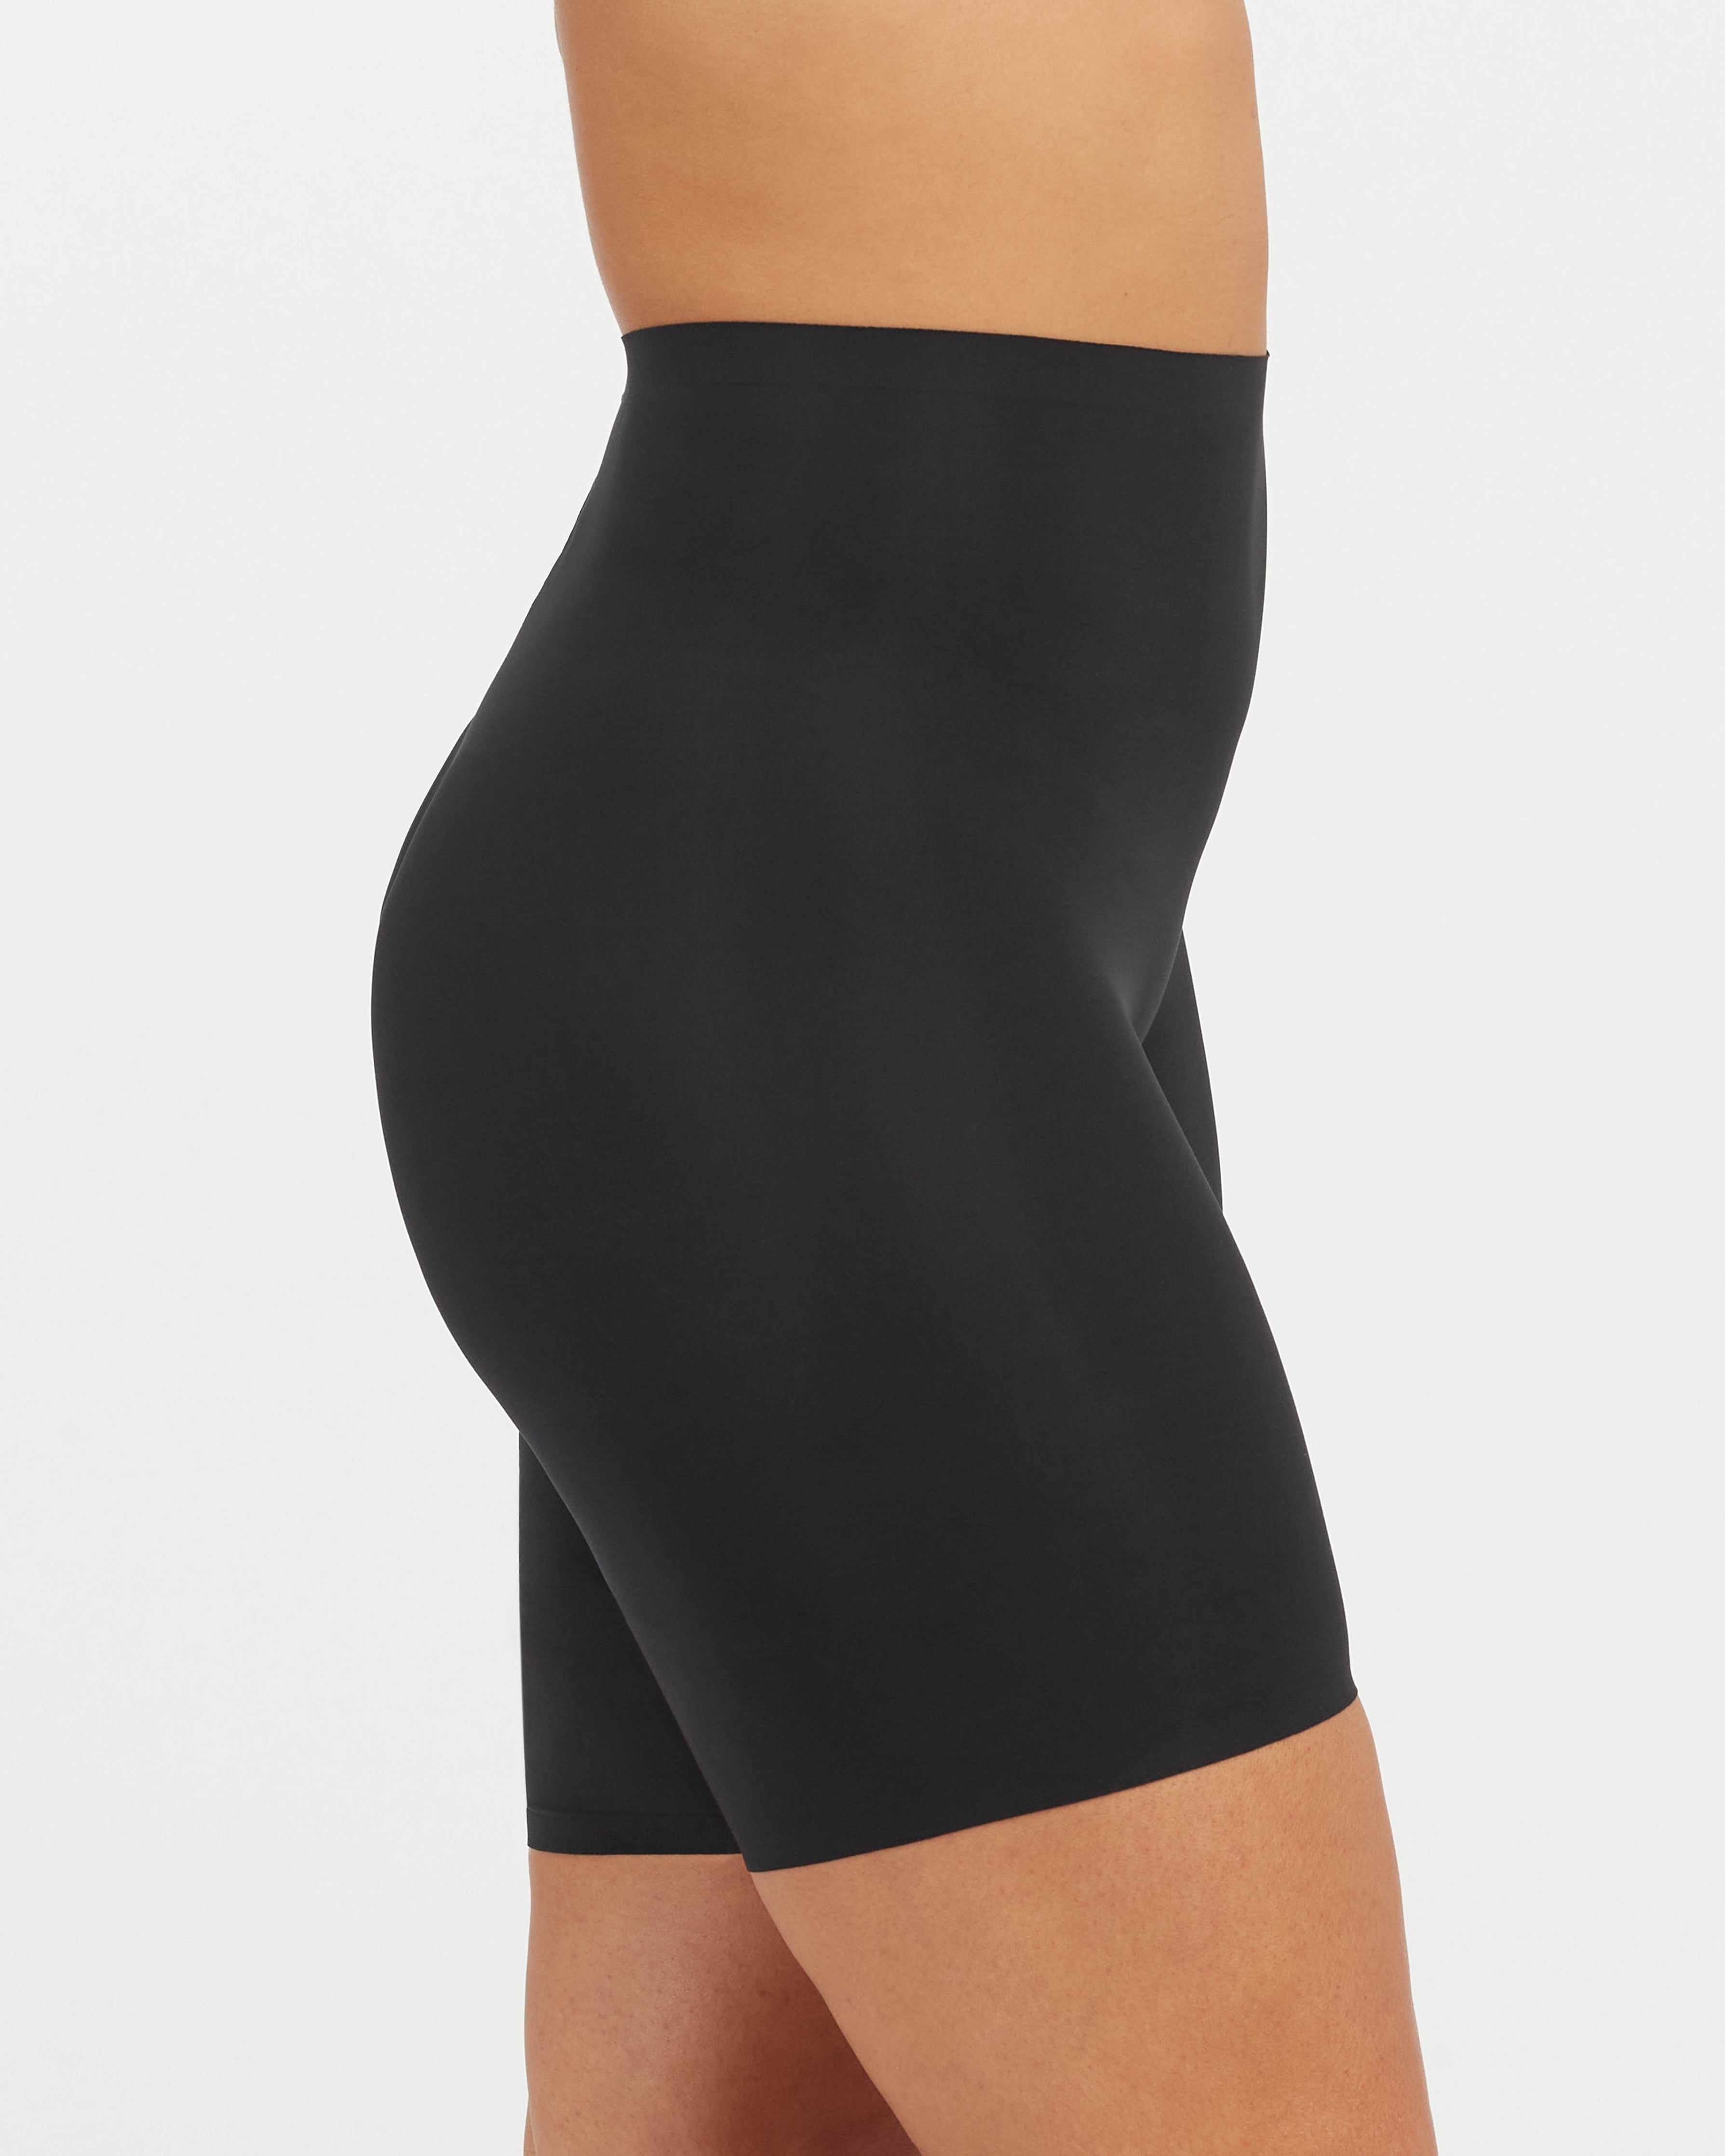 SHAPERX SZ7219-Black-S- Women's Butt Lifter Shaping Shorts, Black, Small